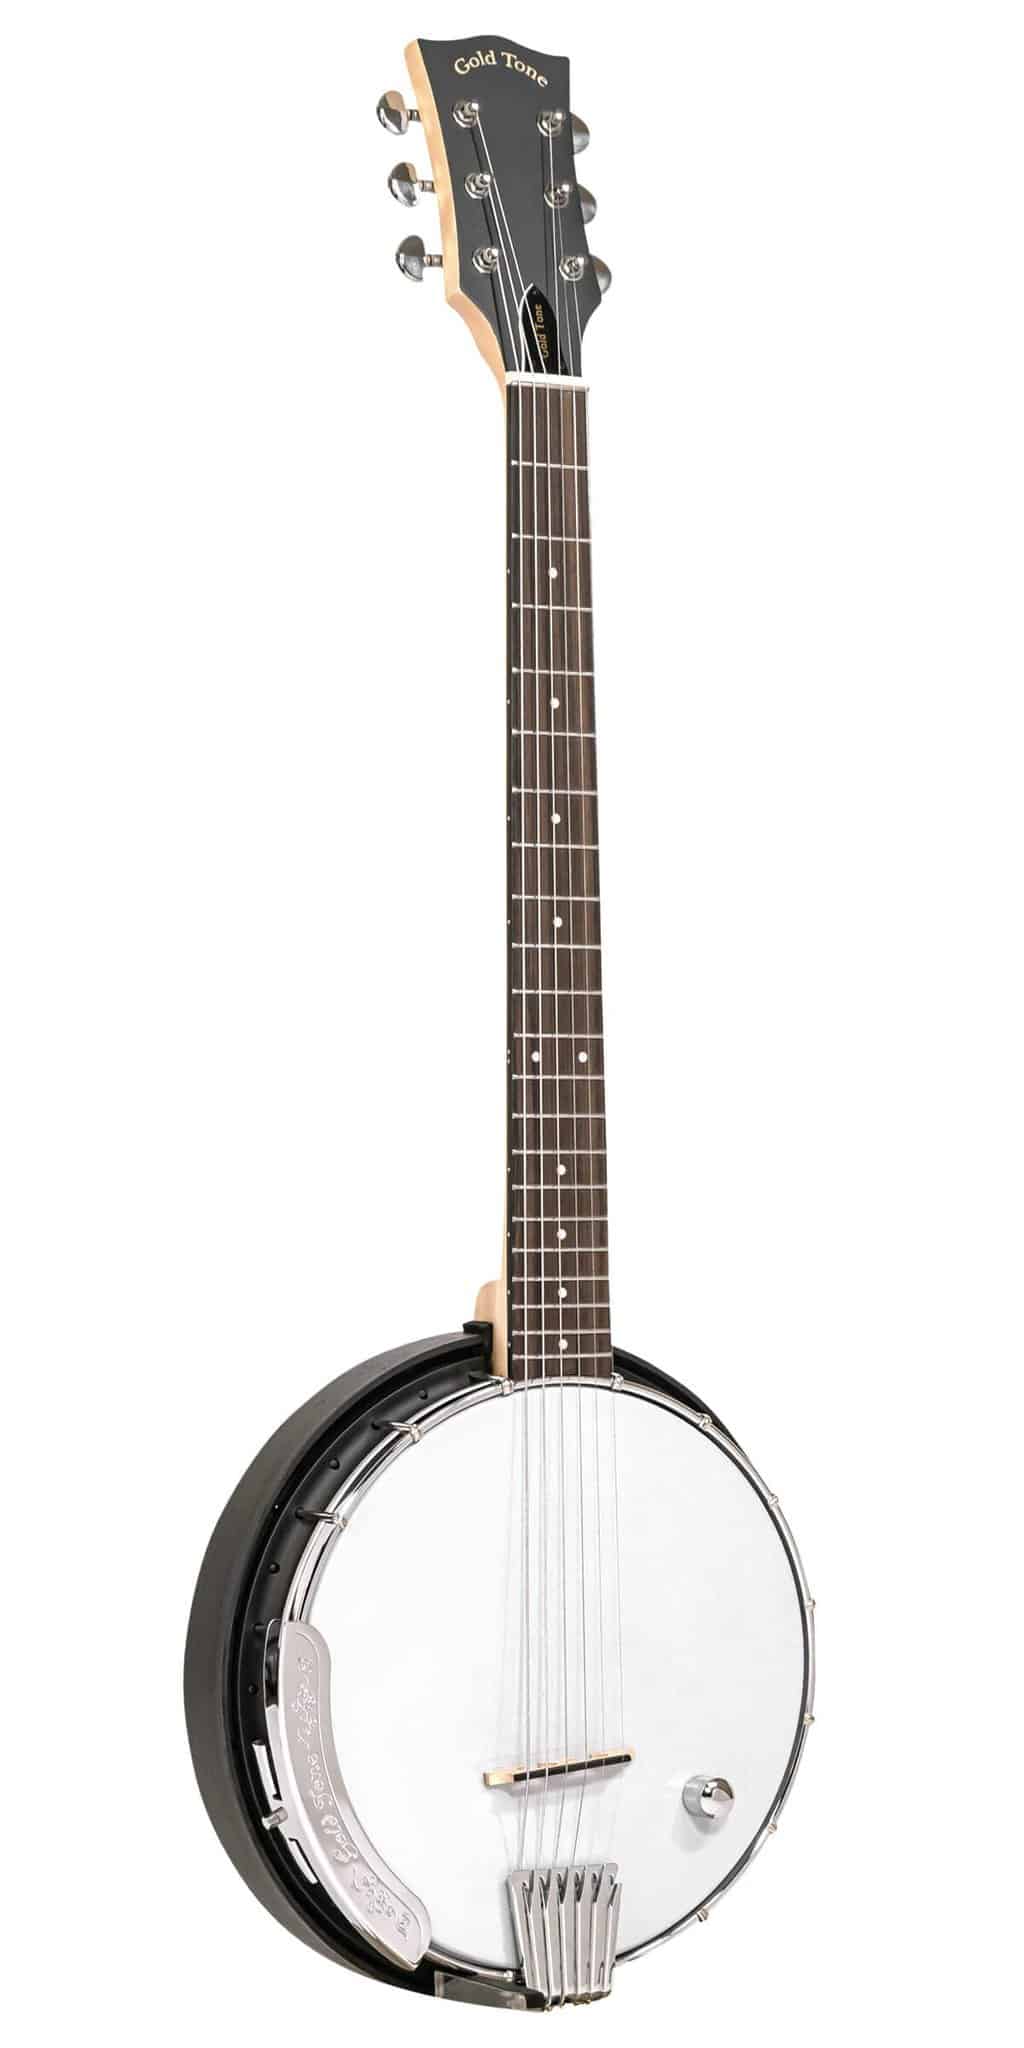 Six-String Banjo